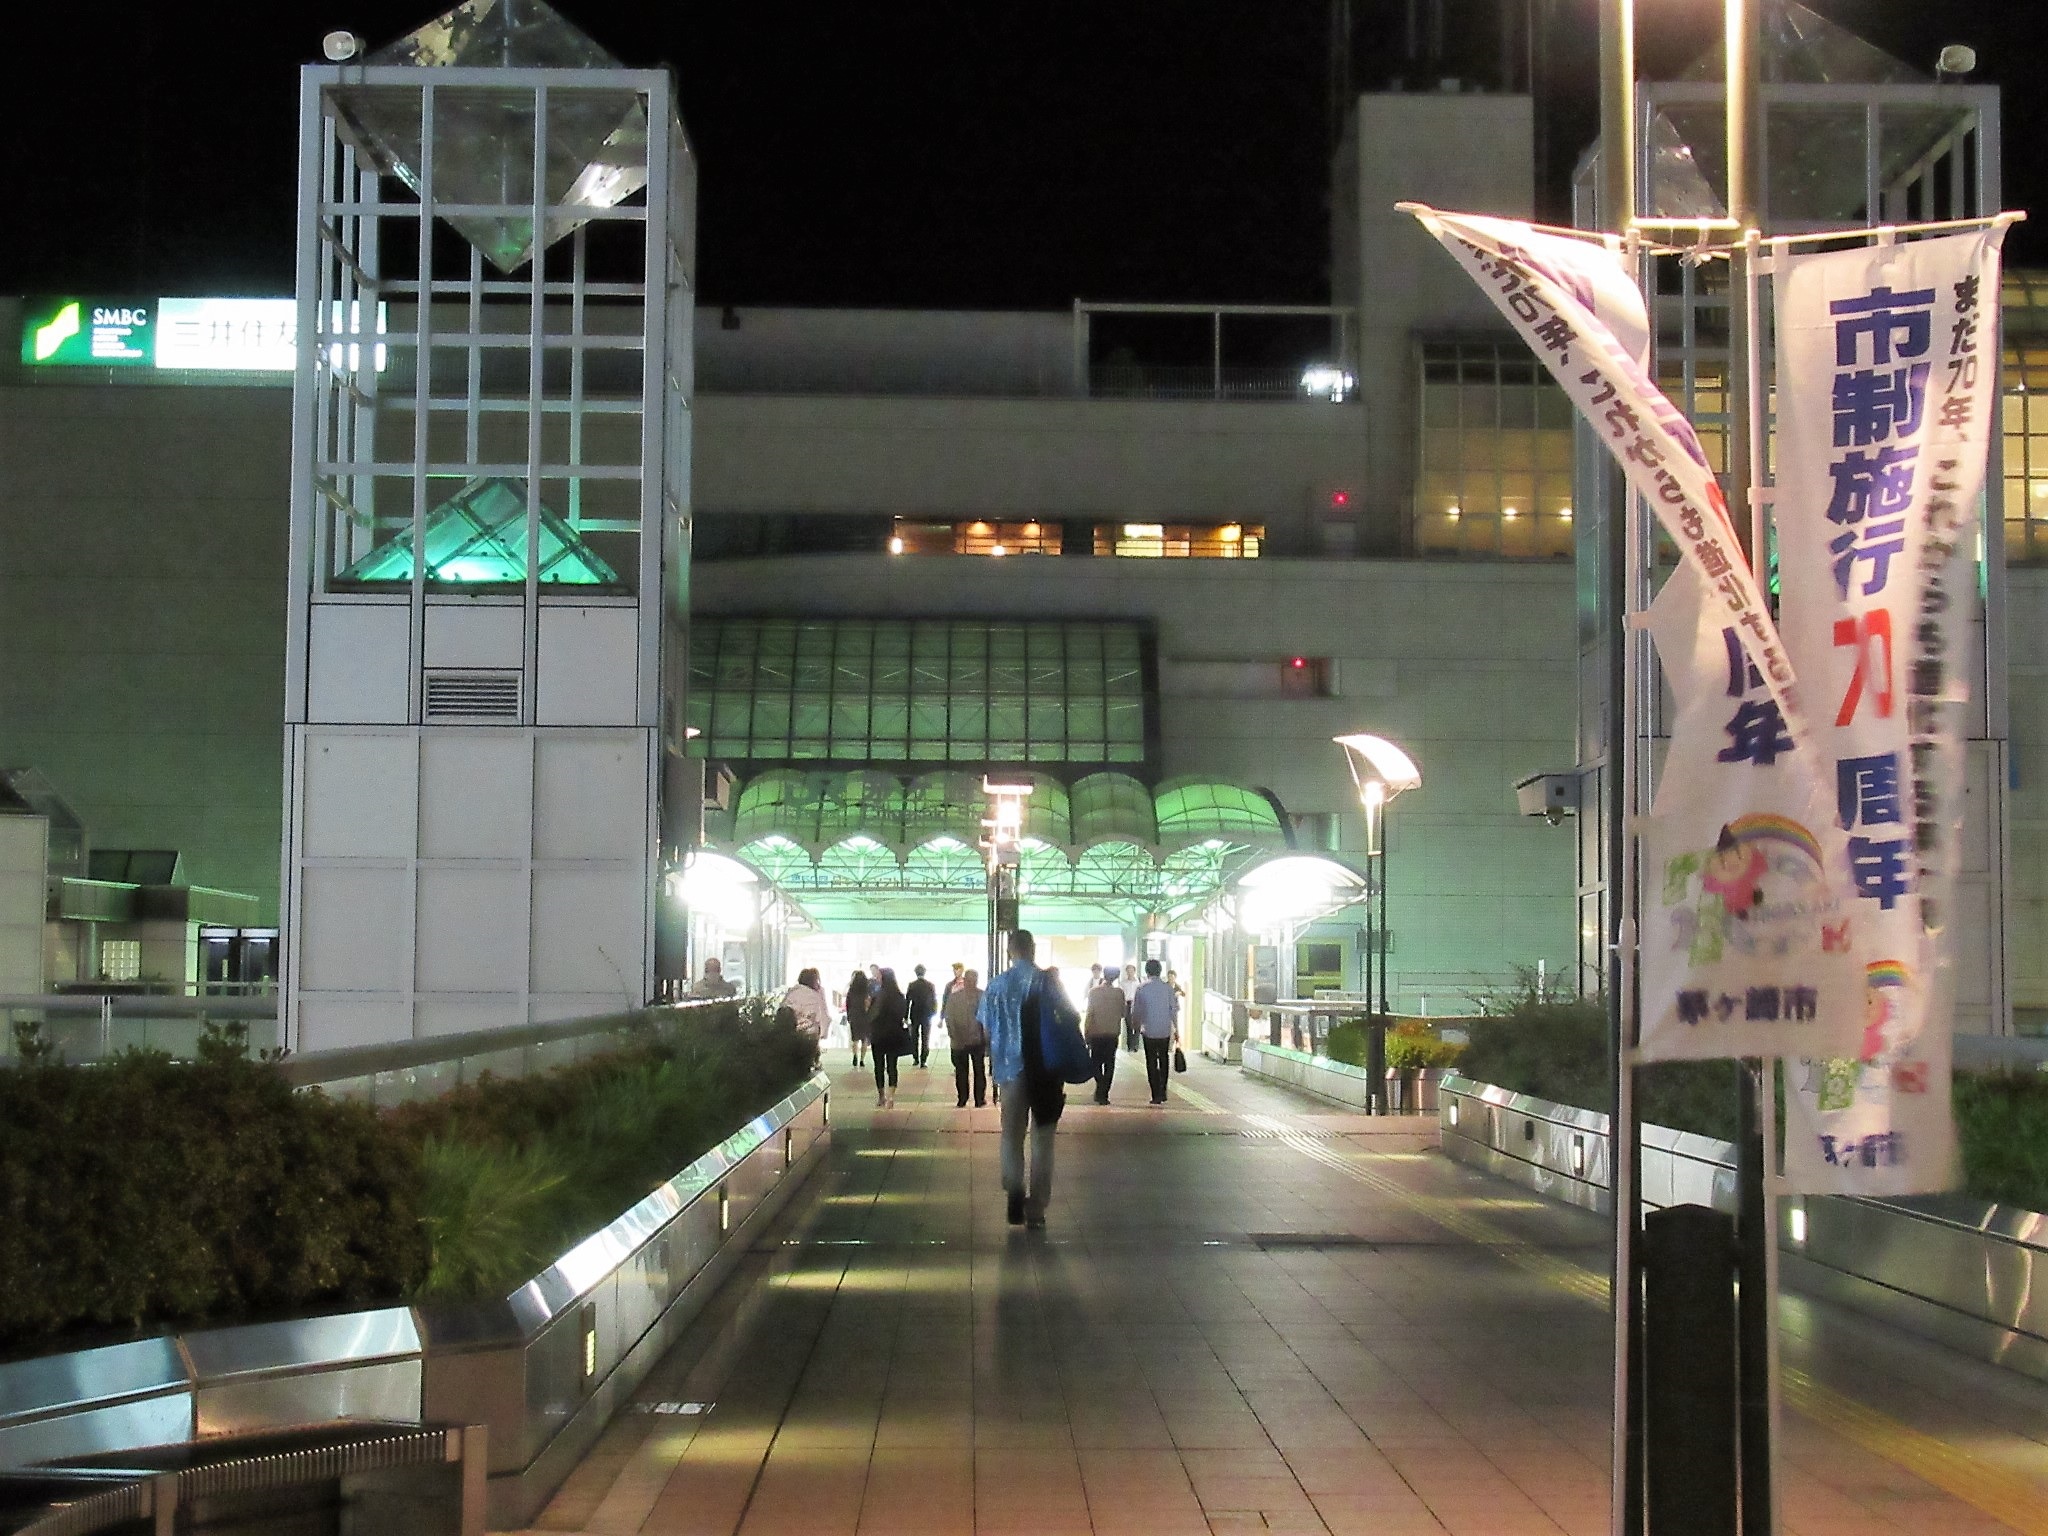 Chigasaki Station at night